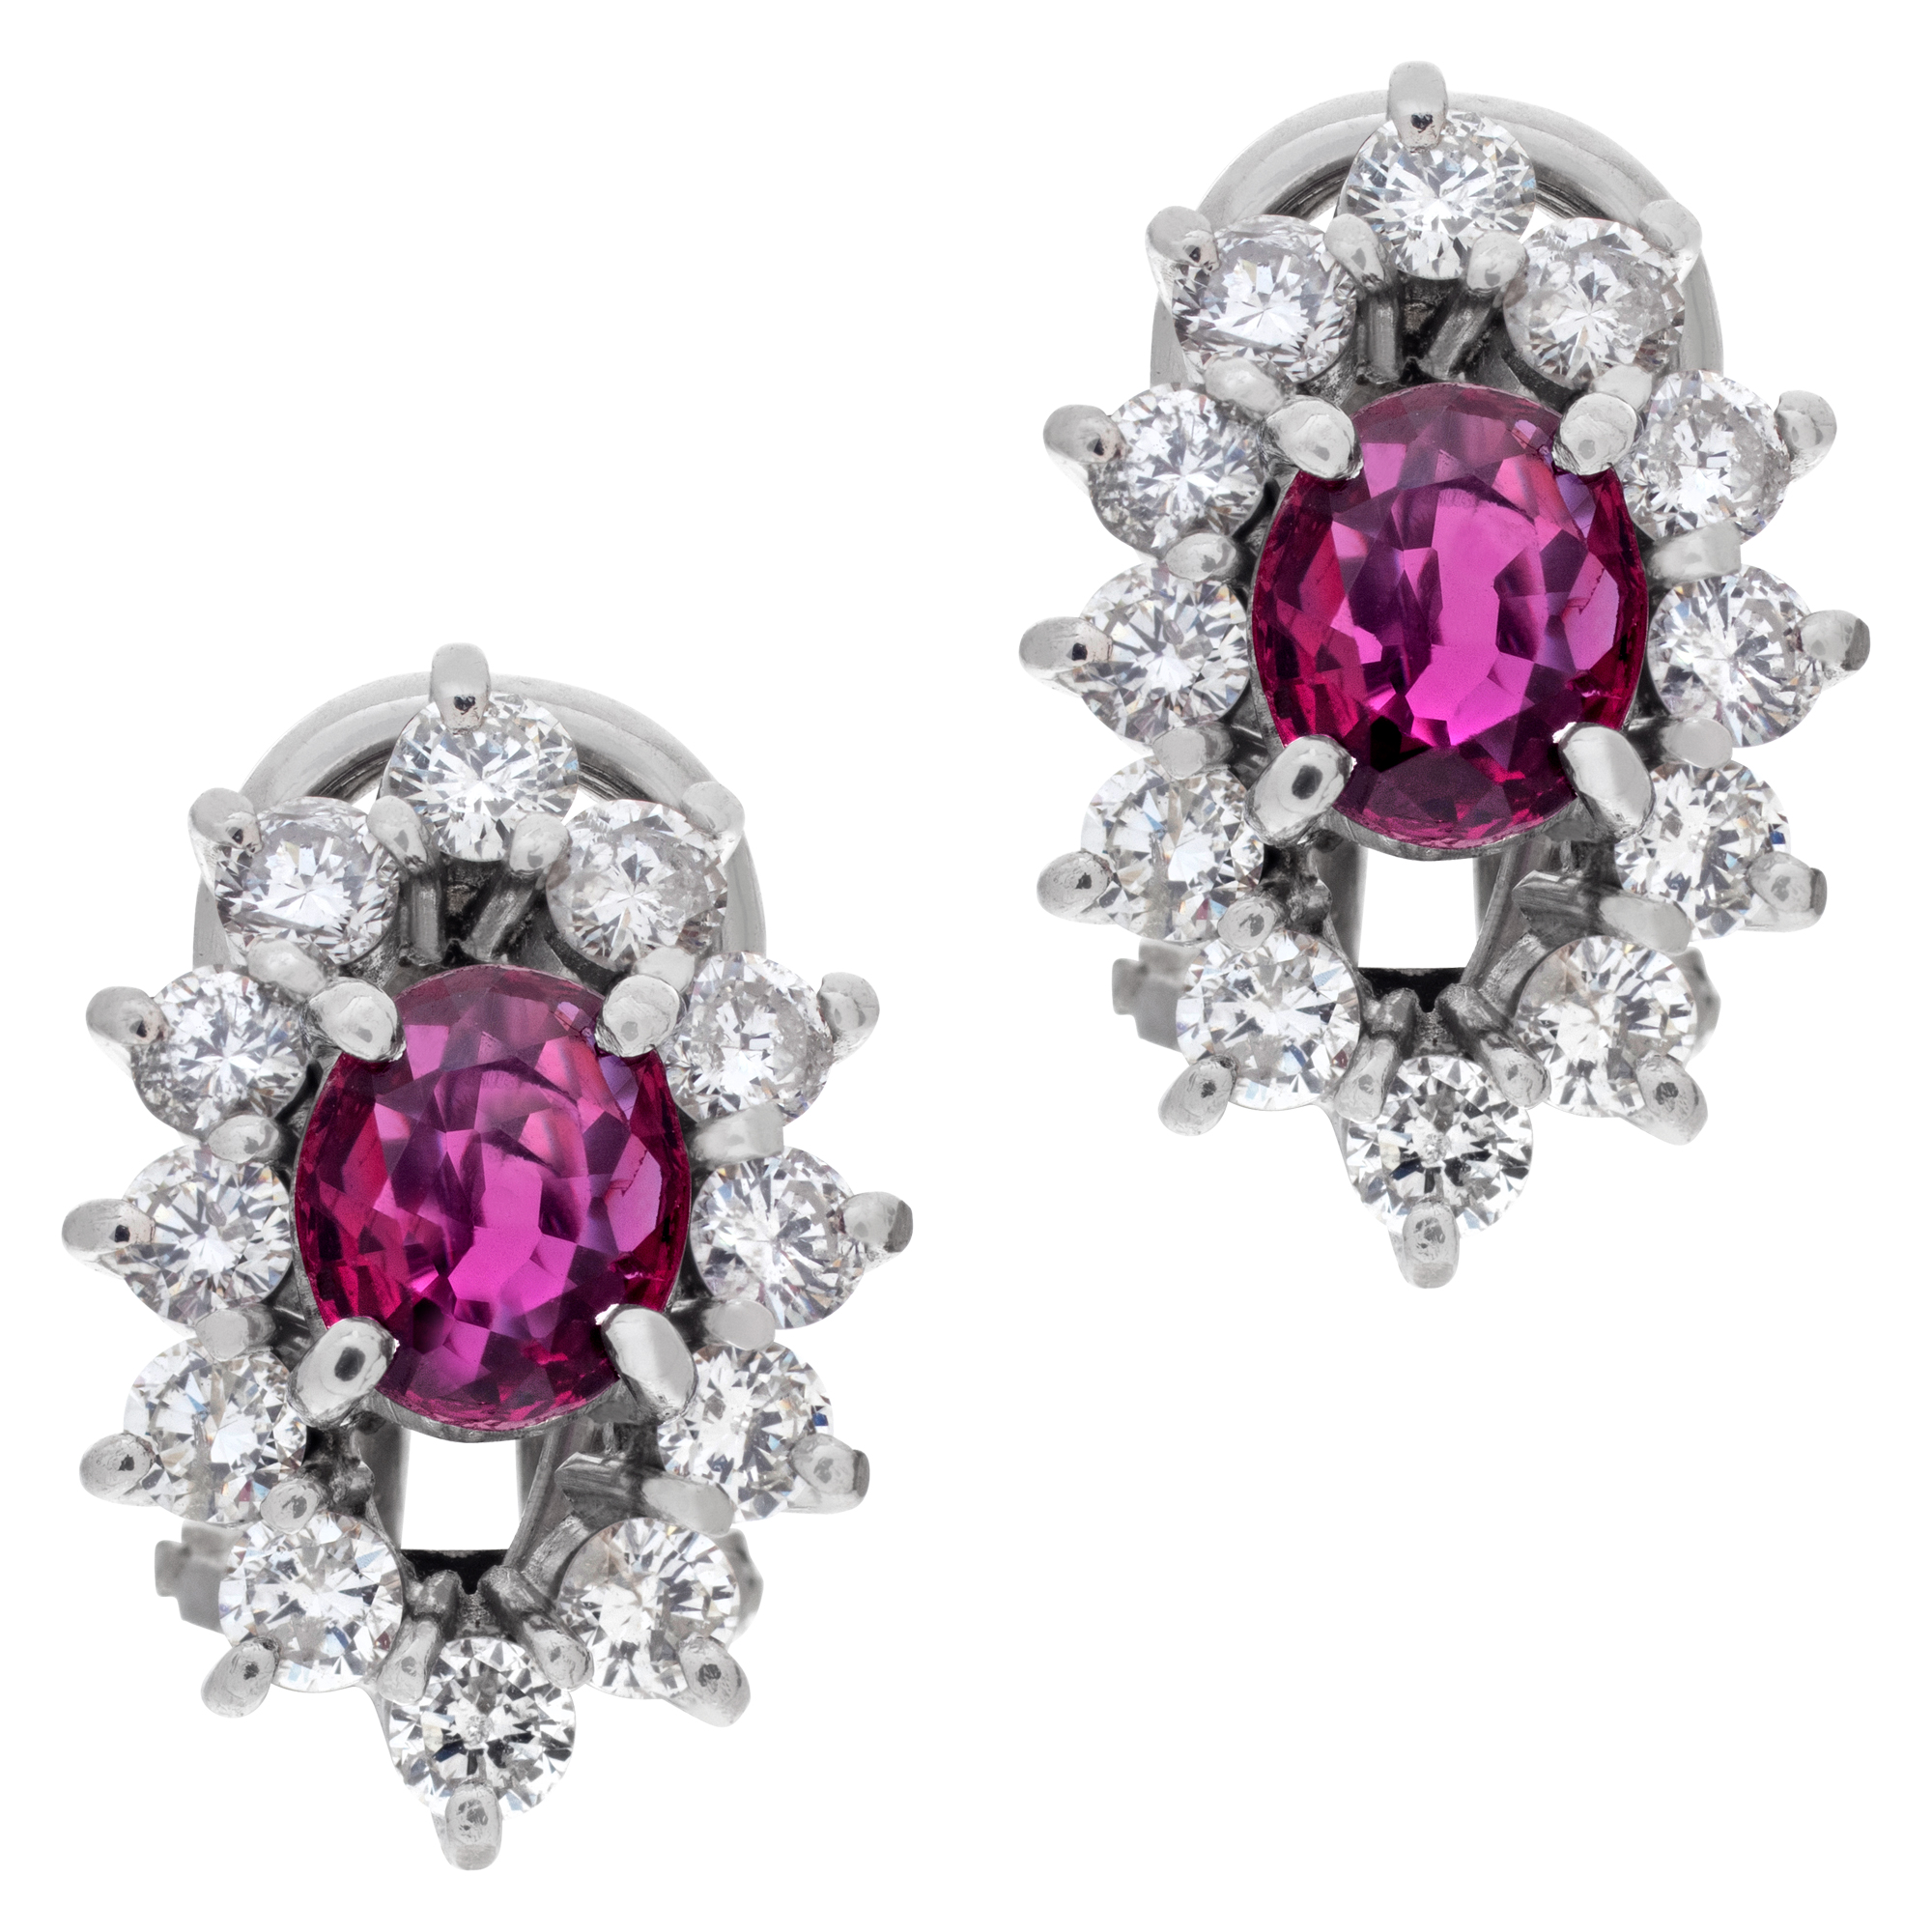 Ruby & diamond earrings set in 14k white gold.